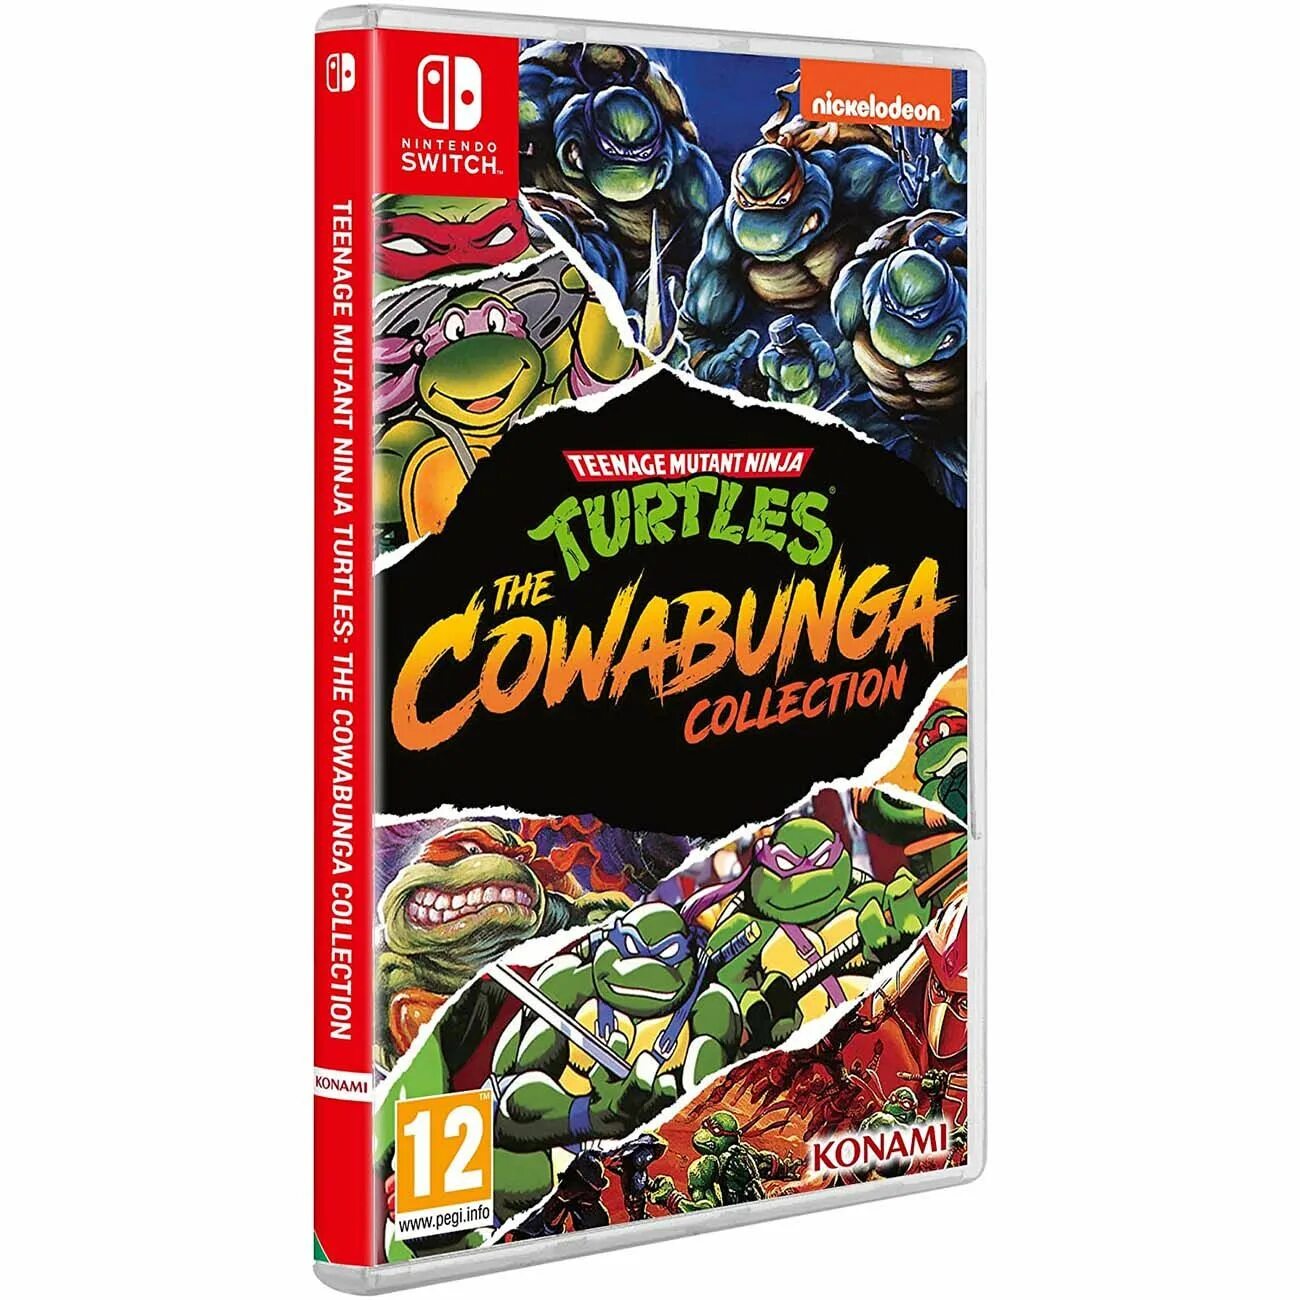 Черепашки ниндзя Cowabunga collection. Teenage Mutant Ninja Turtles: the Cowabunga collection обложка. TMNT Switch. Сколько стоит игра МУТАНТ blobs Attack.